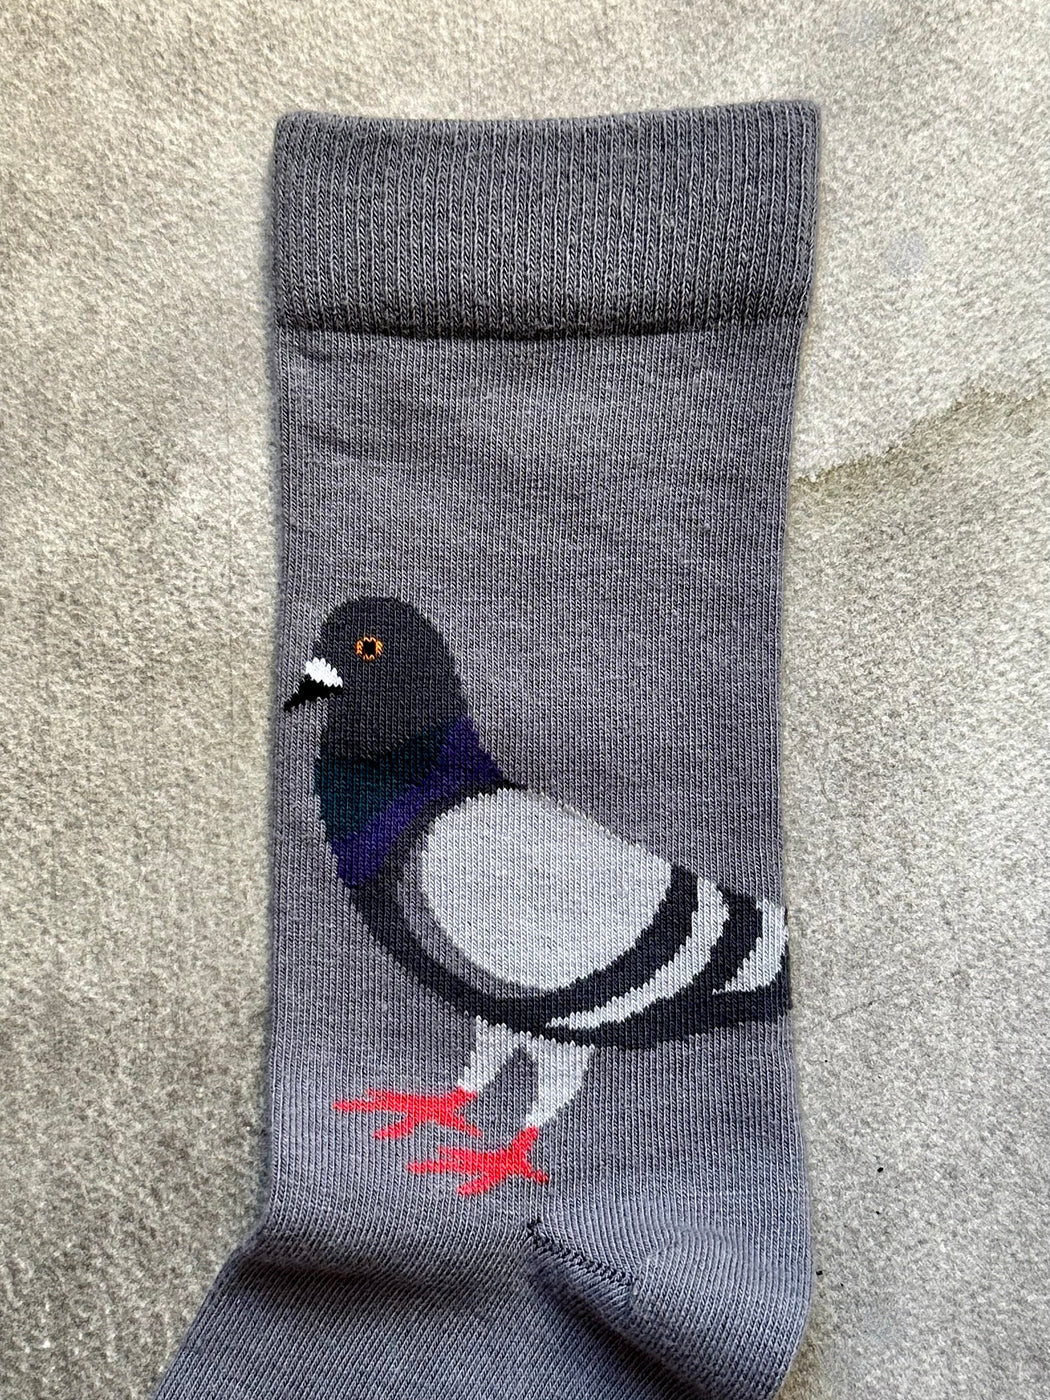 "Pigeon" Socks by This Night